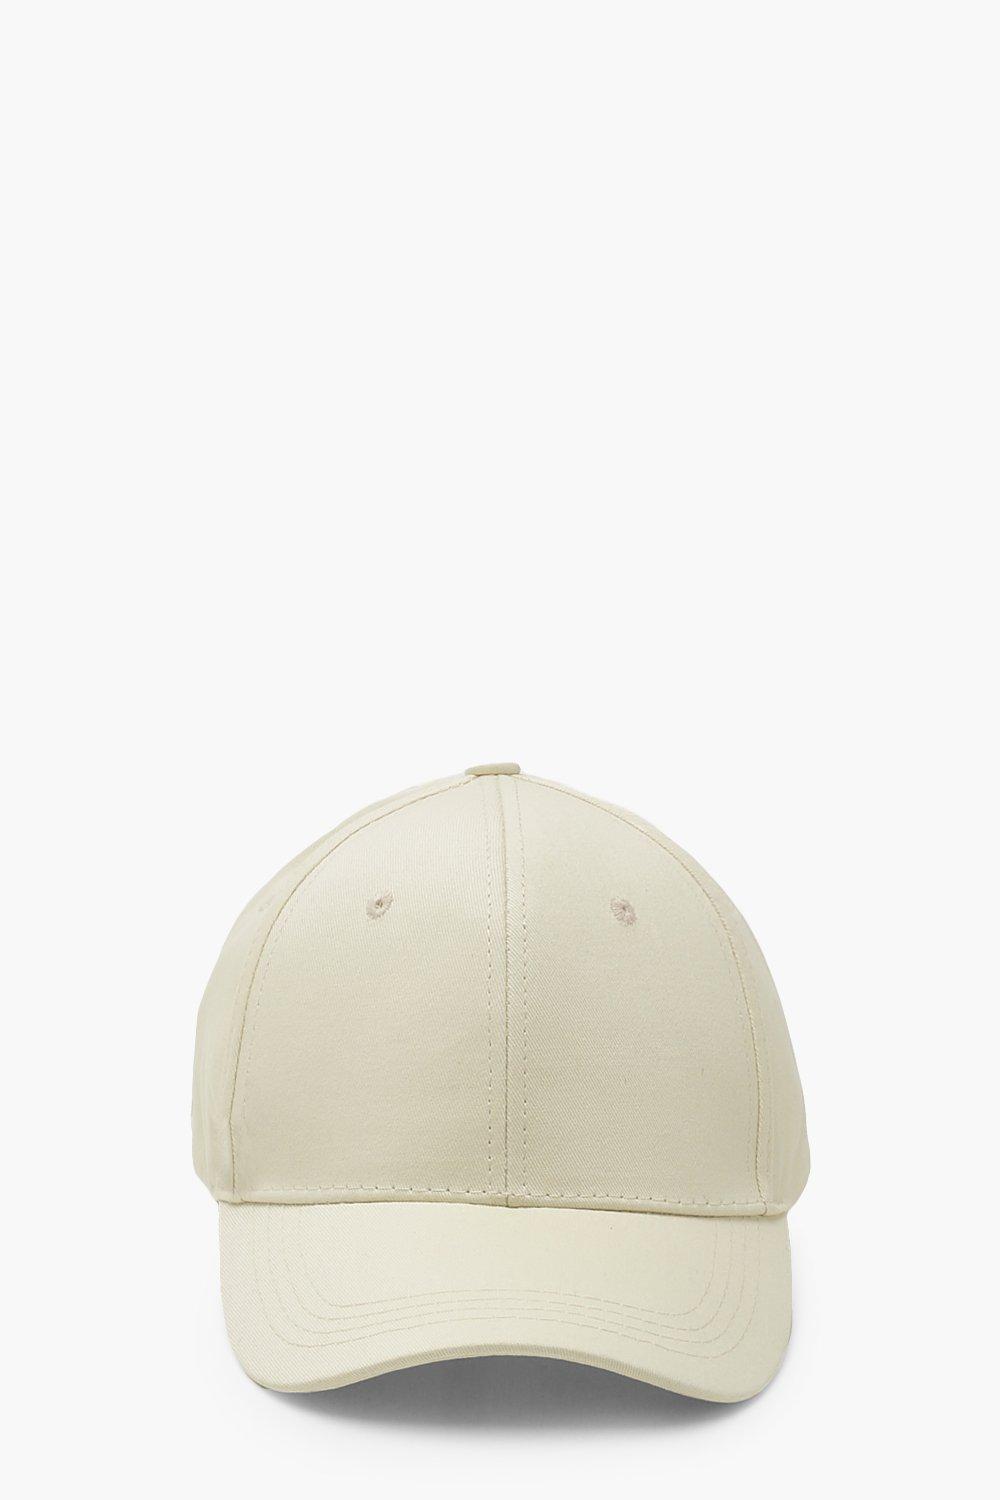 ATABZ Plain Cream Color caps and Hats for Men